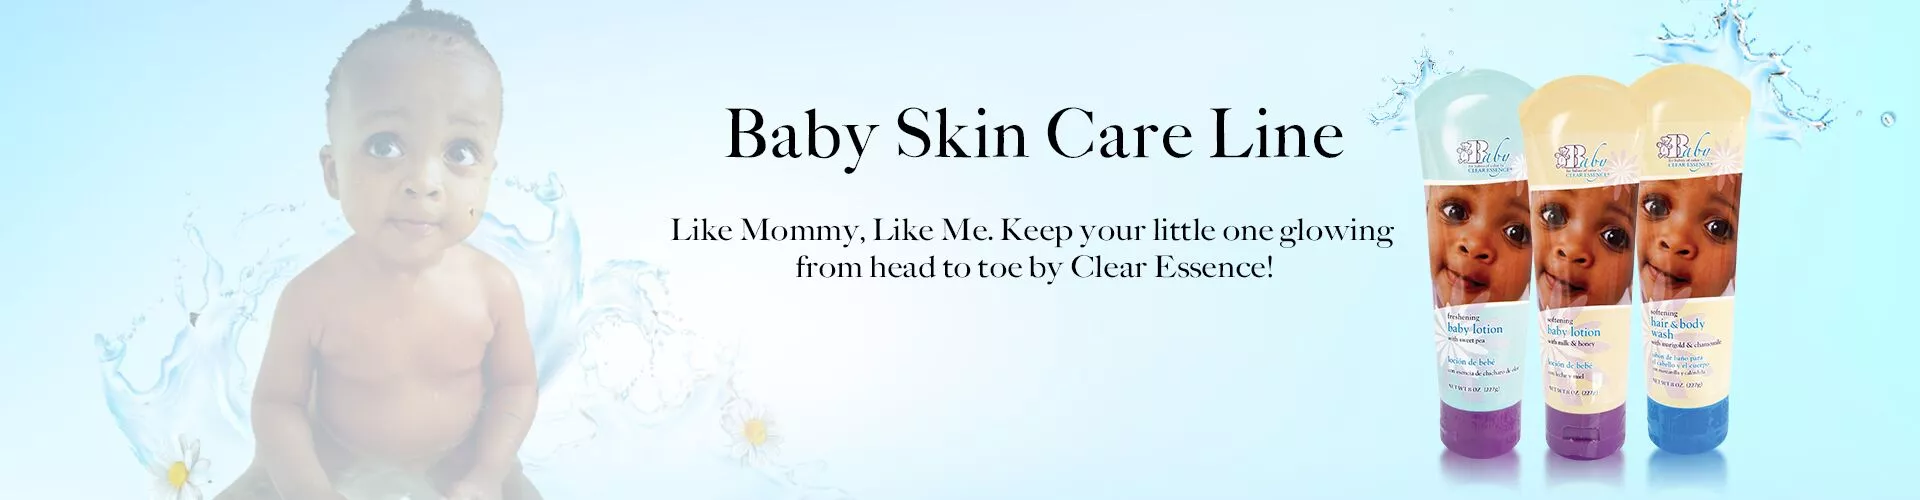 Baby Skin Care Line